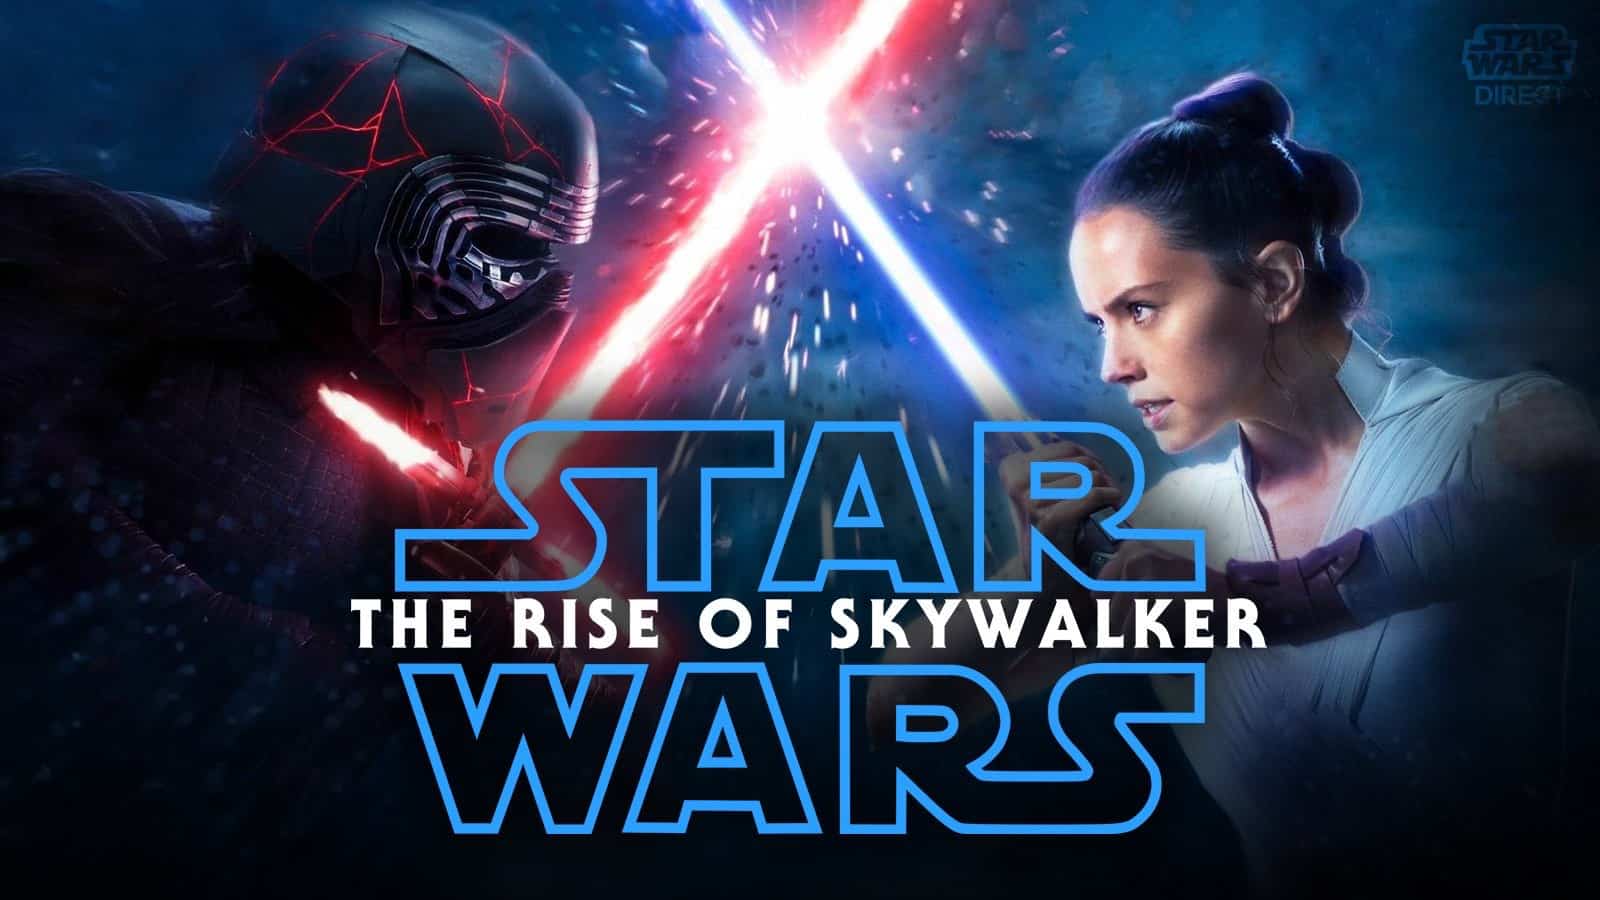 Službeno objavljeno koliko će dugo trajati film 'Star Wars: The Rise of Skywalker'